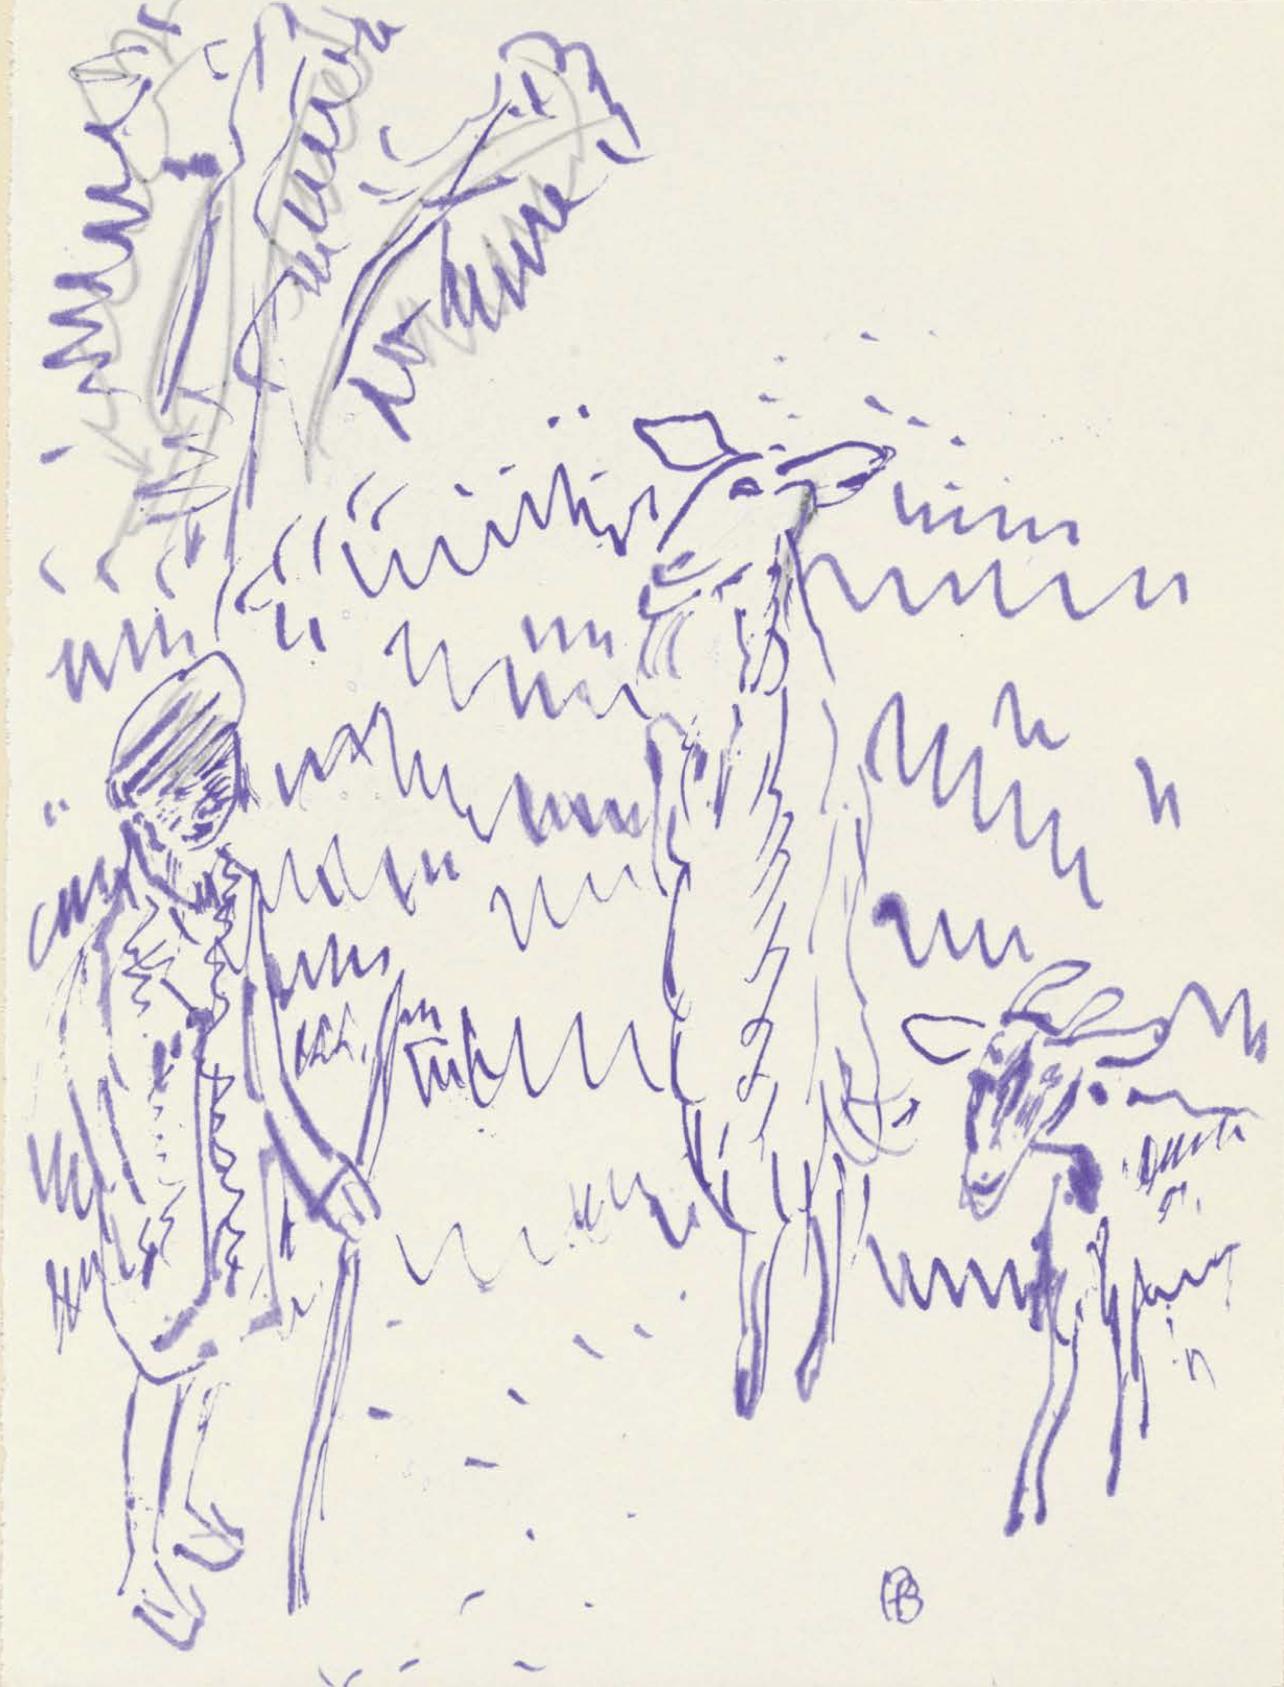 Bonnard, Composition (Terrasse 54), Pierre Bonnard Correspondences (after)